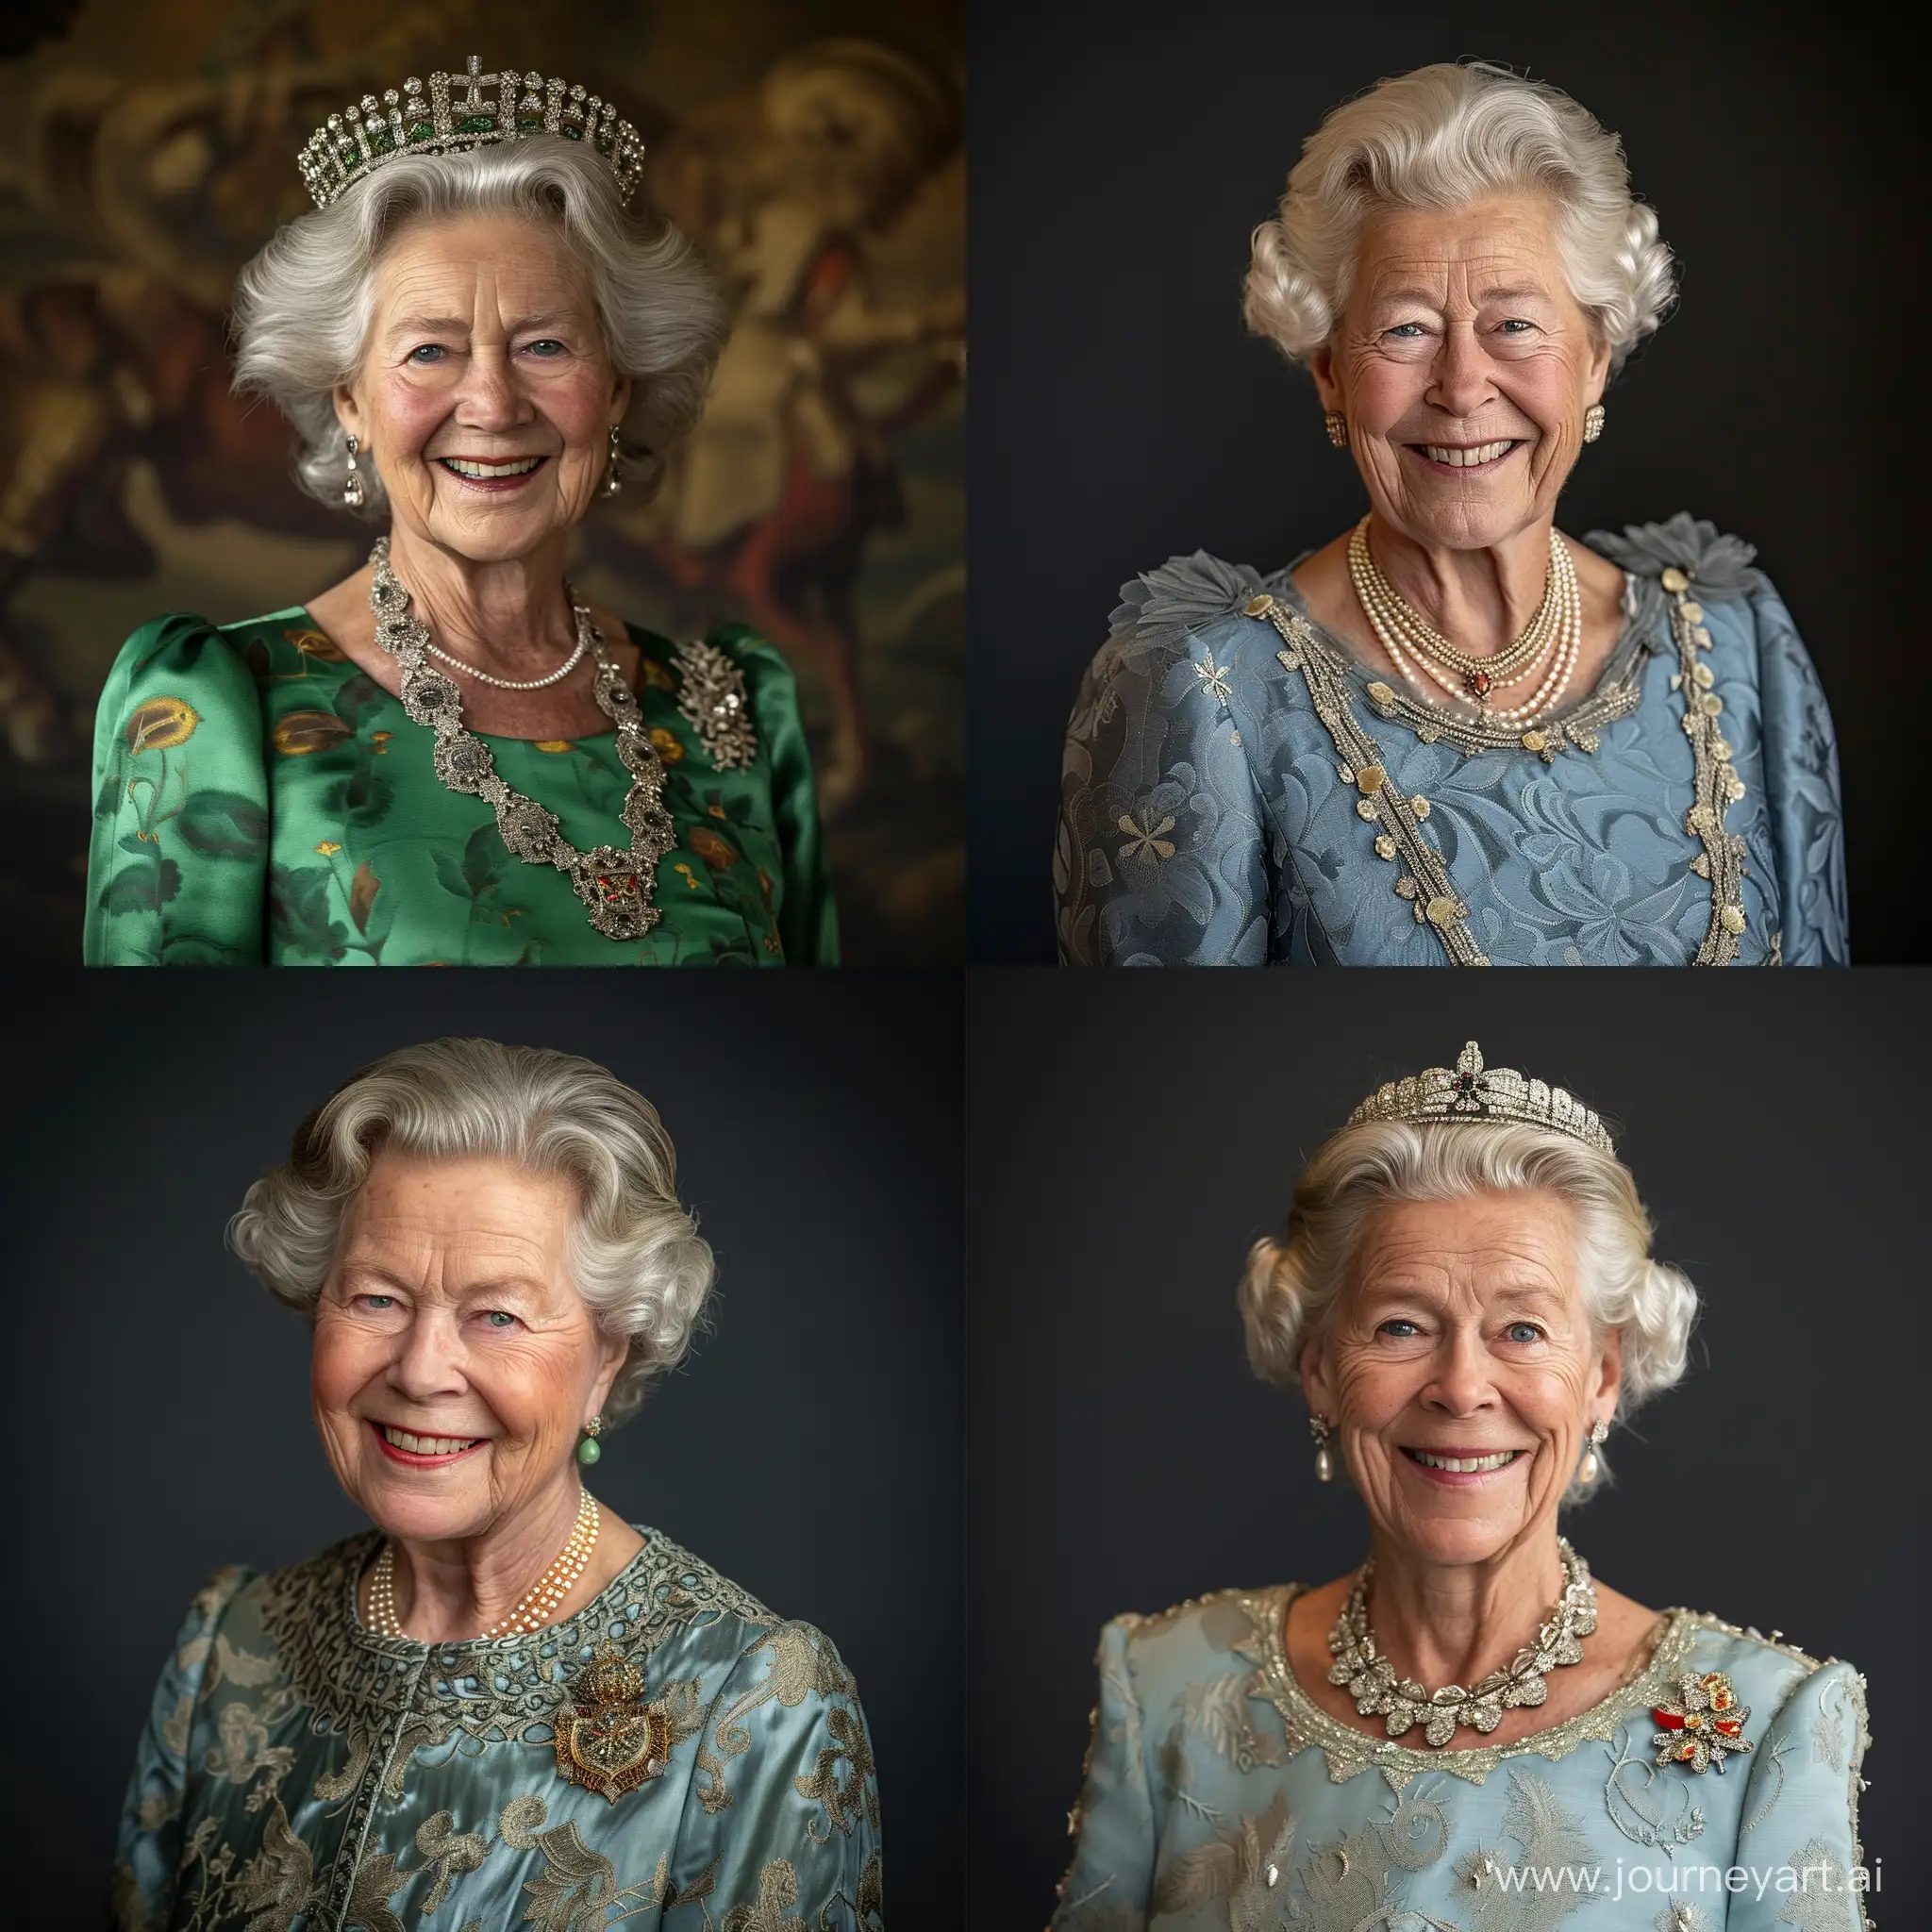 Queen-Margarethe-of-Denmark-Smiling-in-Official-Royal-Portrait